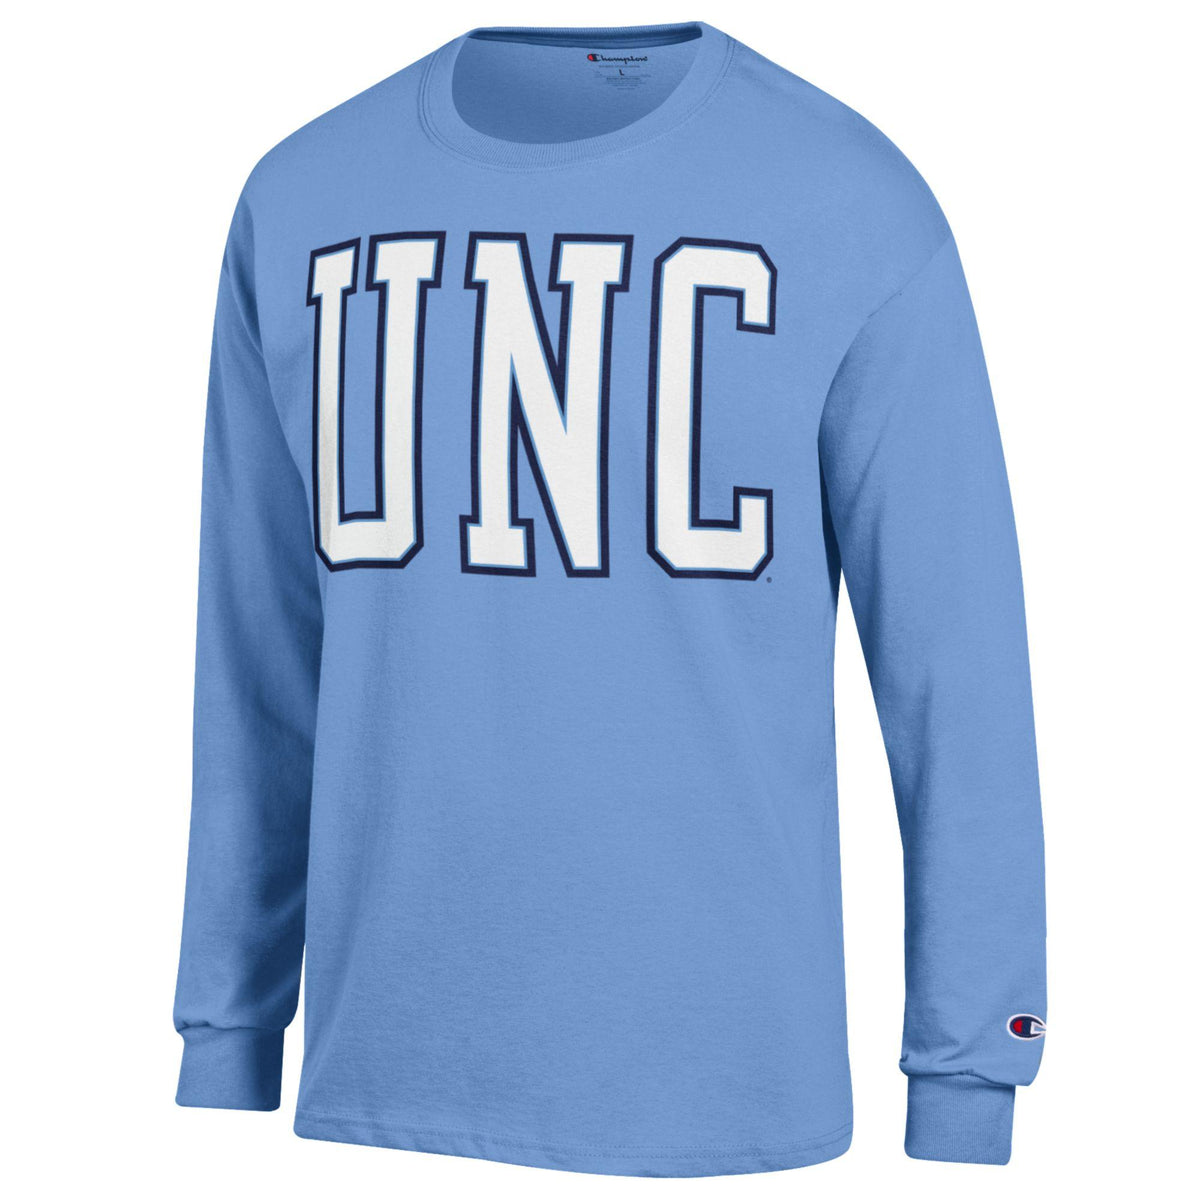 UNC Long Sleeve Shirt